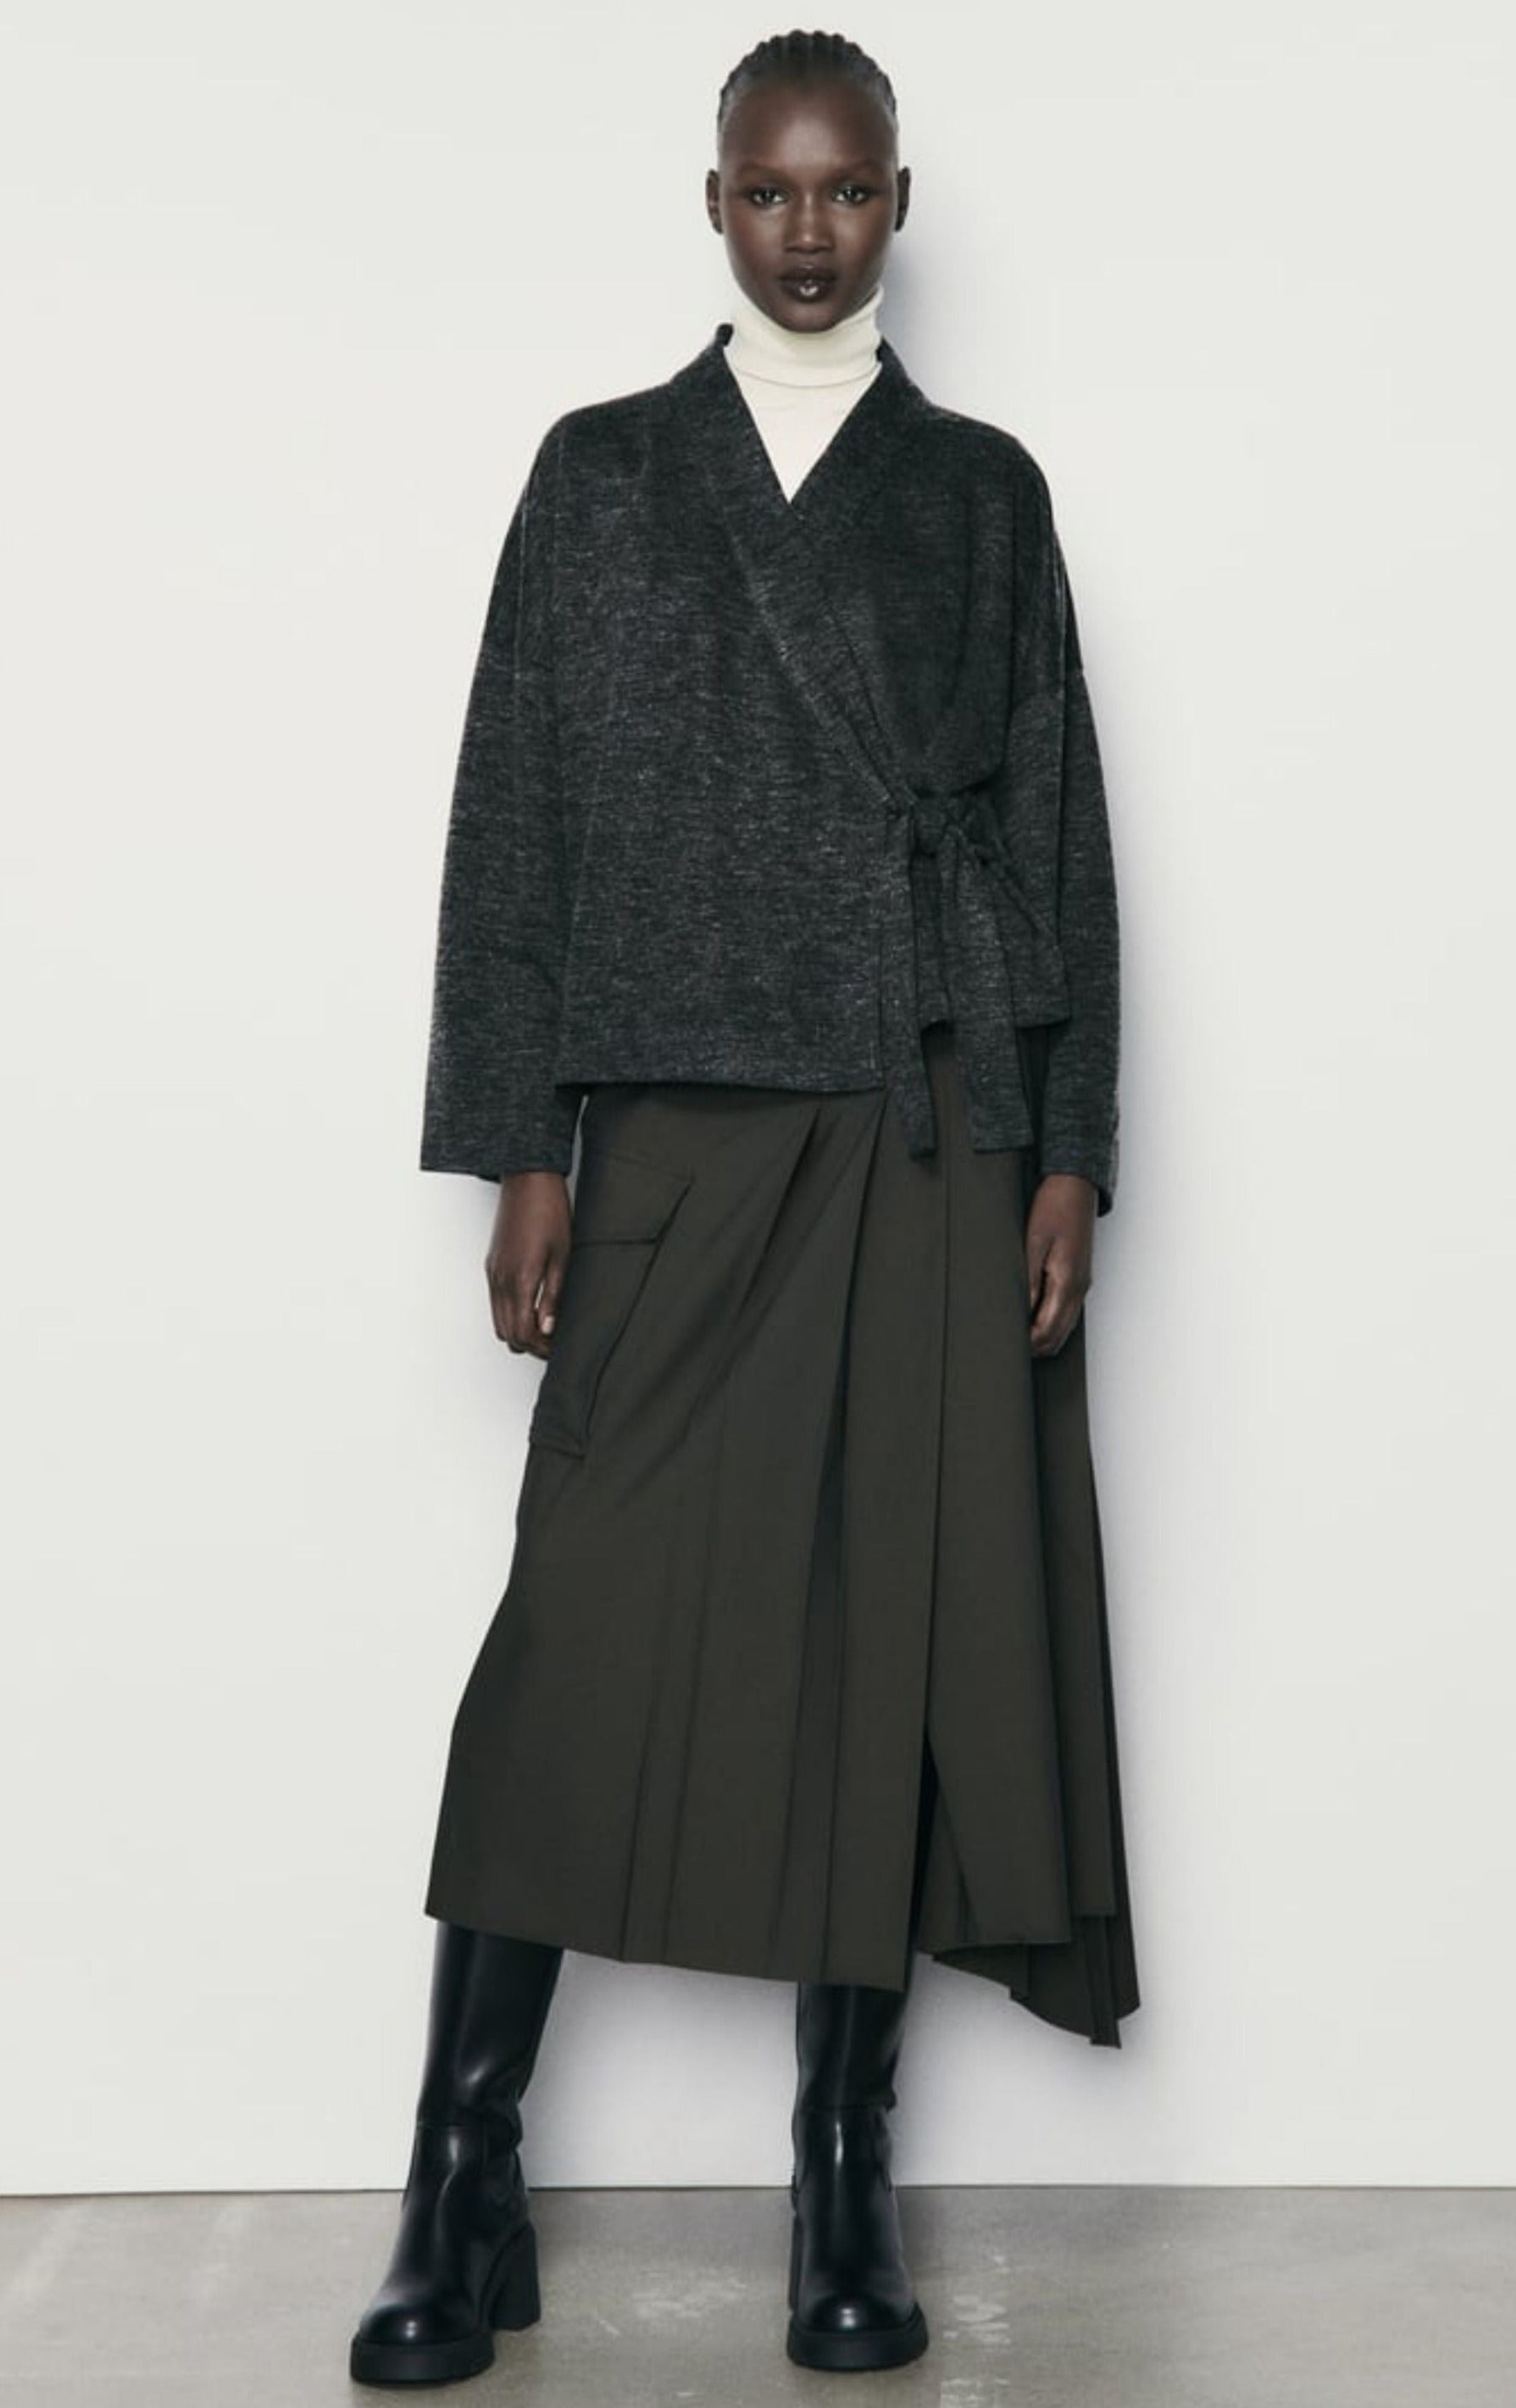 Zara Soft Surplice Kimono product image